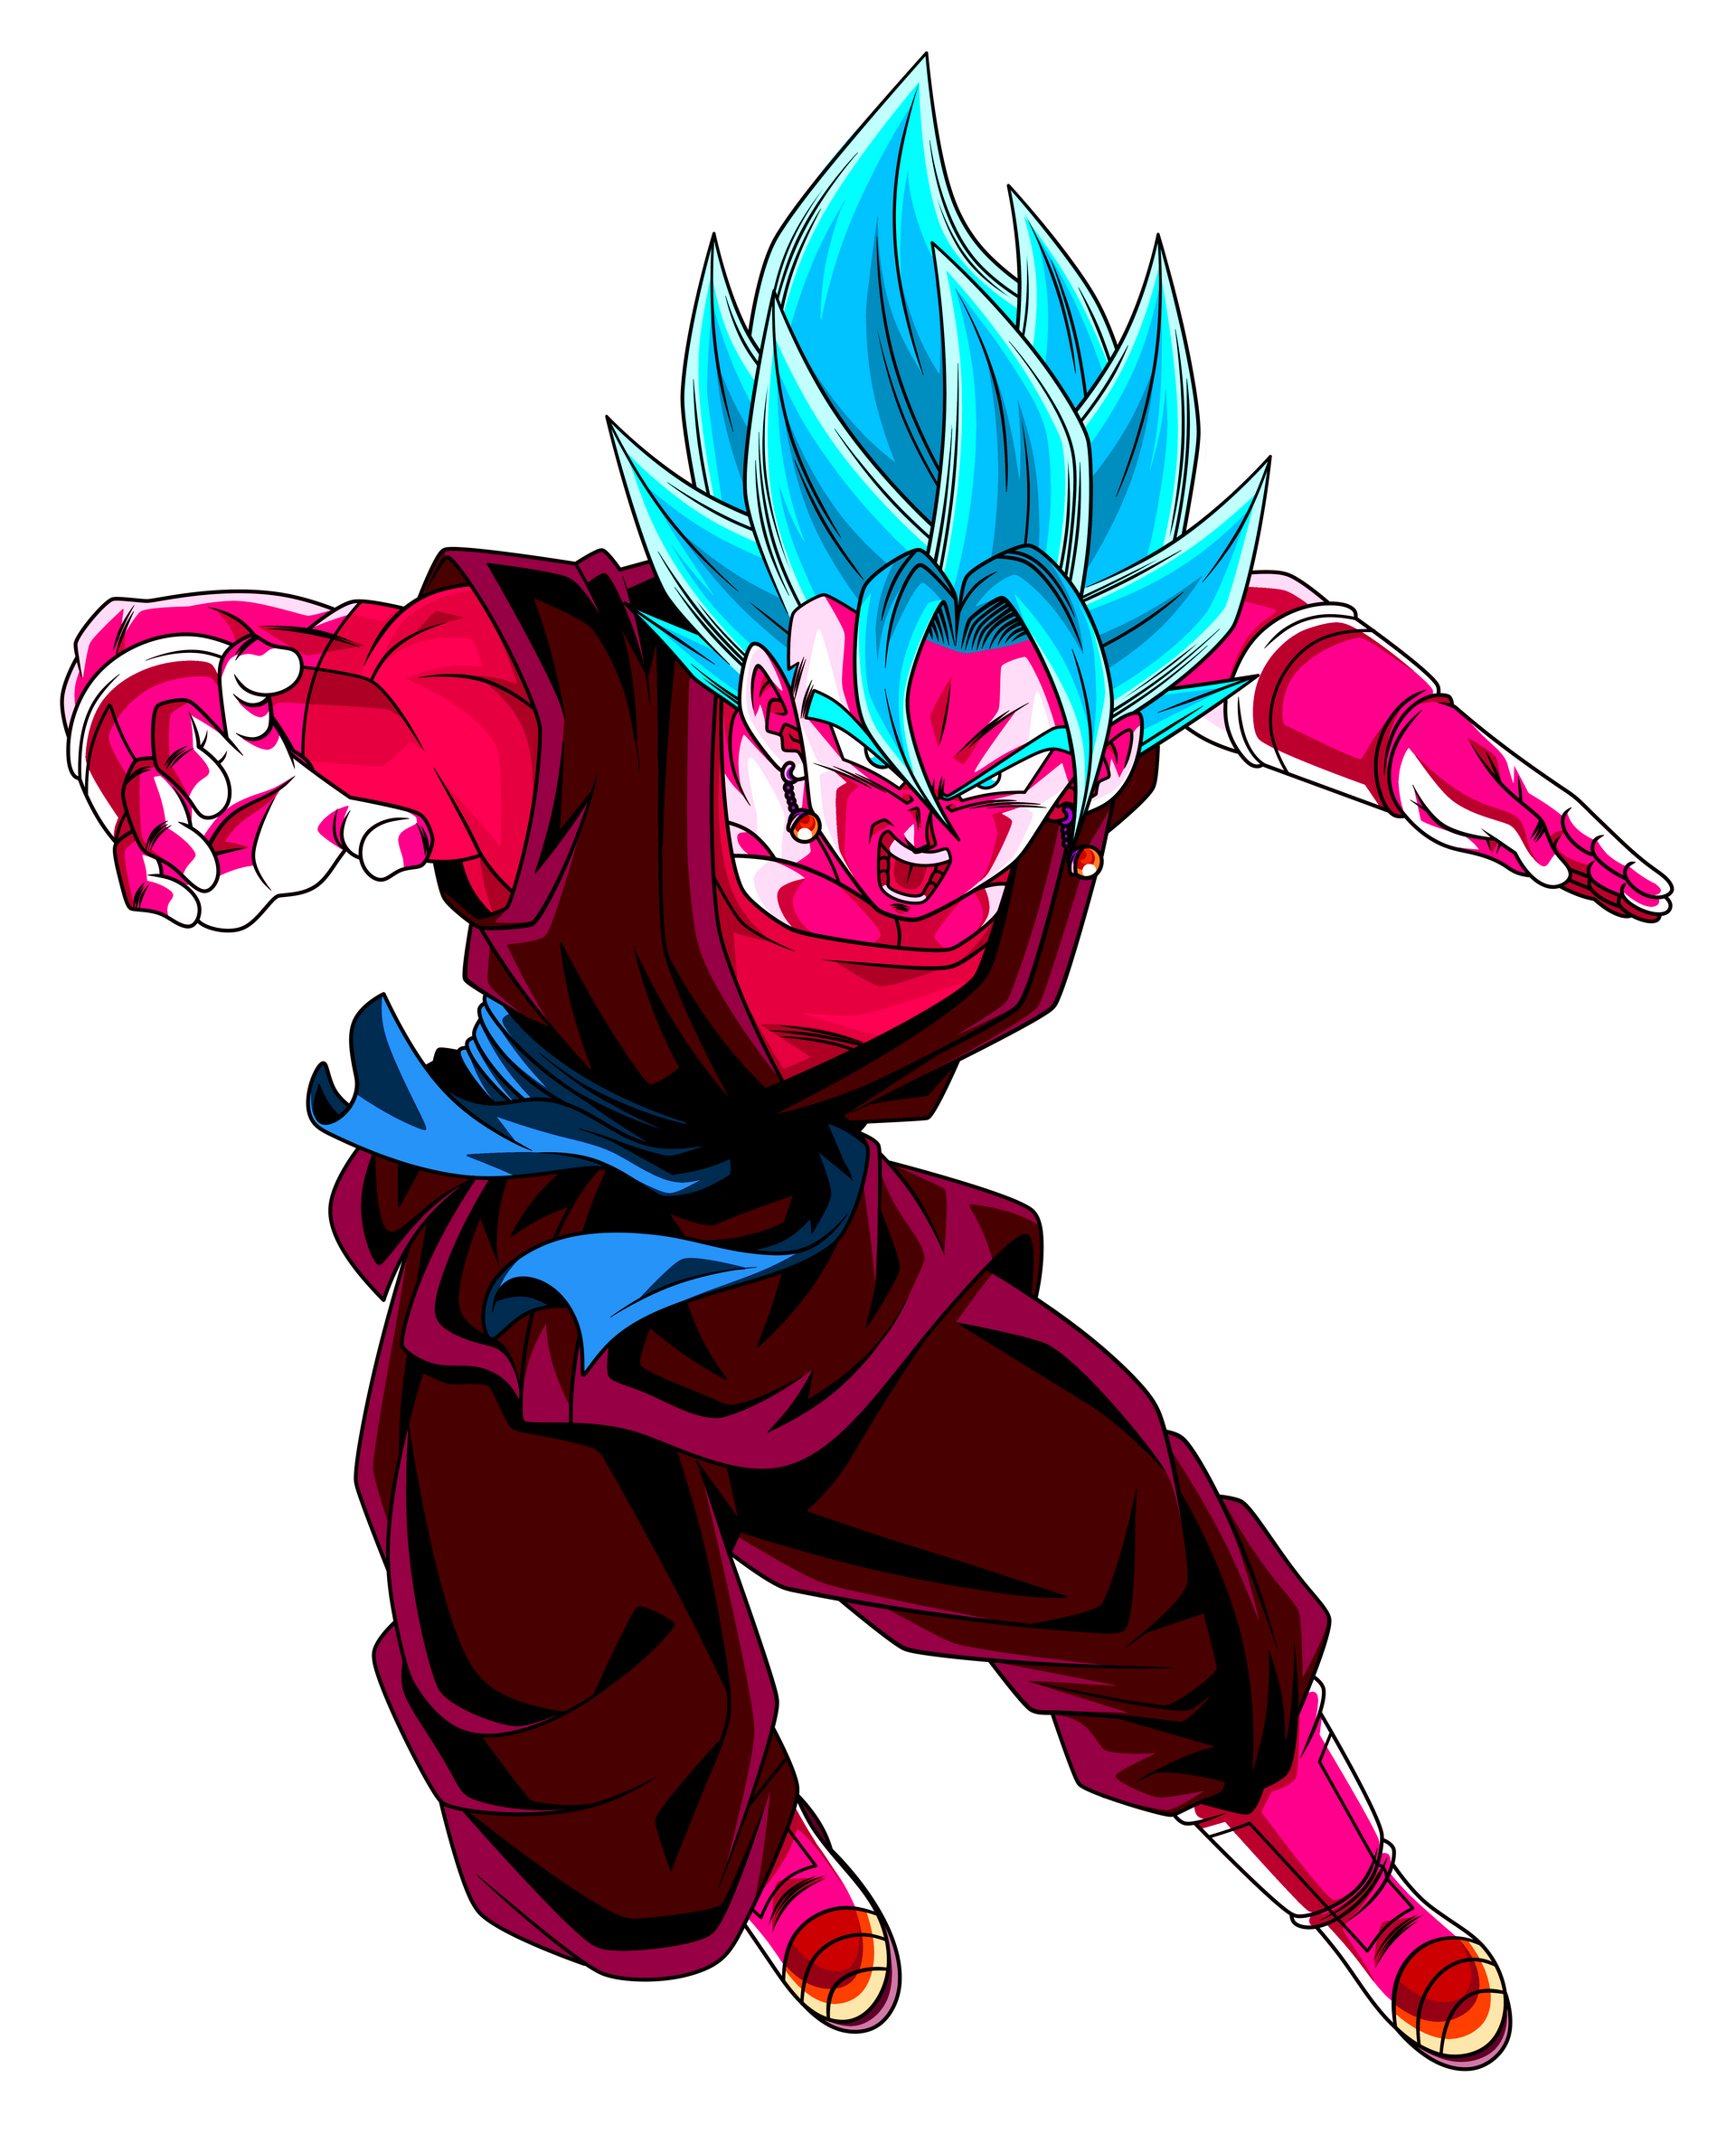 Goku (DBS) ssj blue kaioken x20 by xchs on DeviantArt